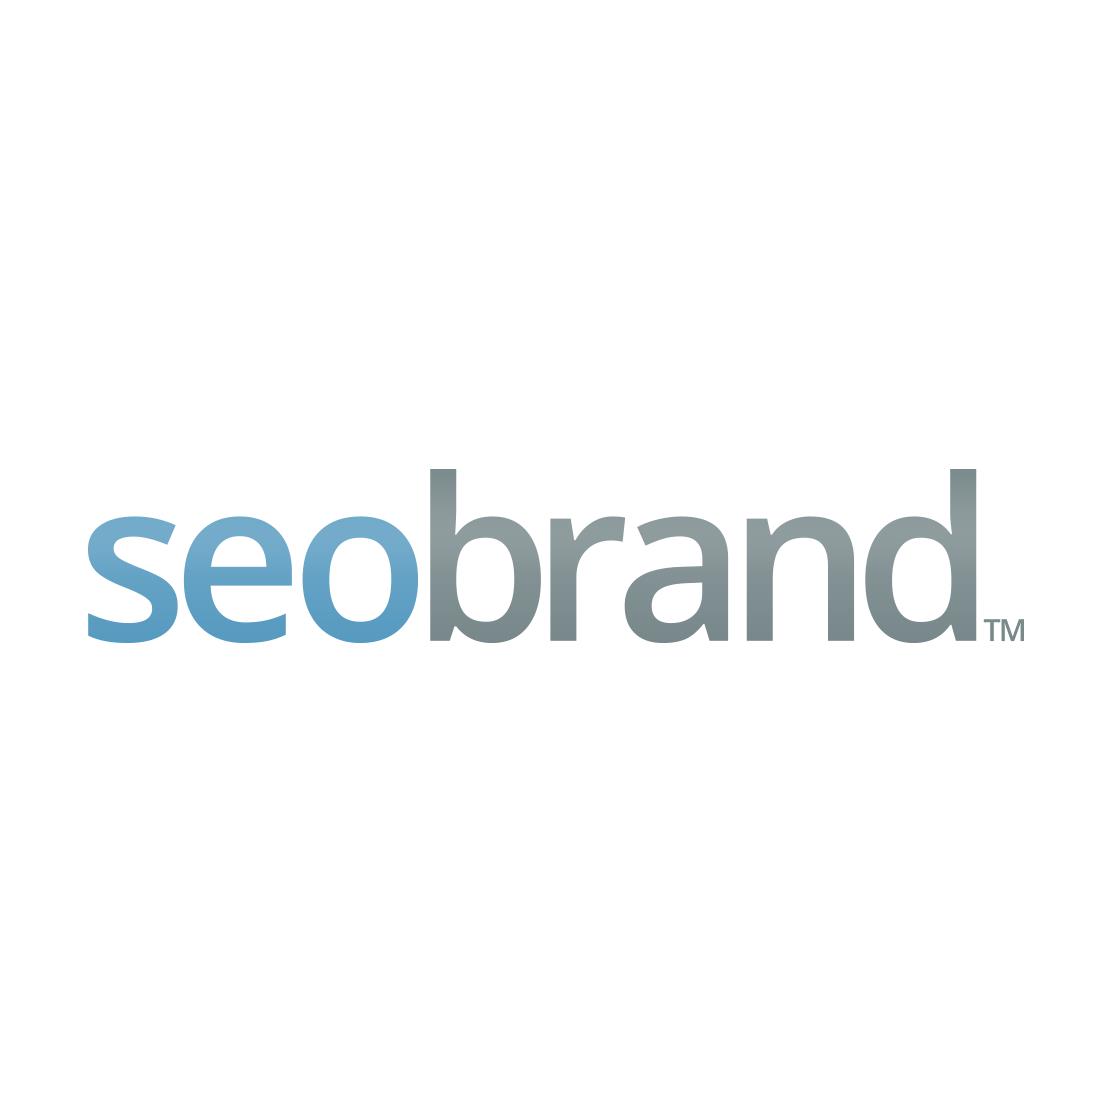 Best Real Estate SEO Business Logo: SEO Brand